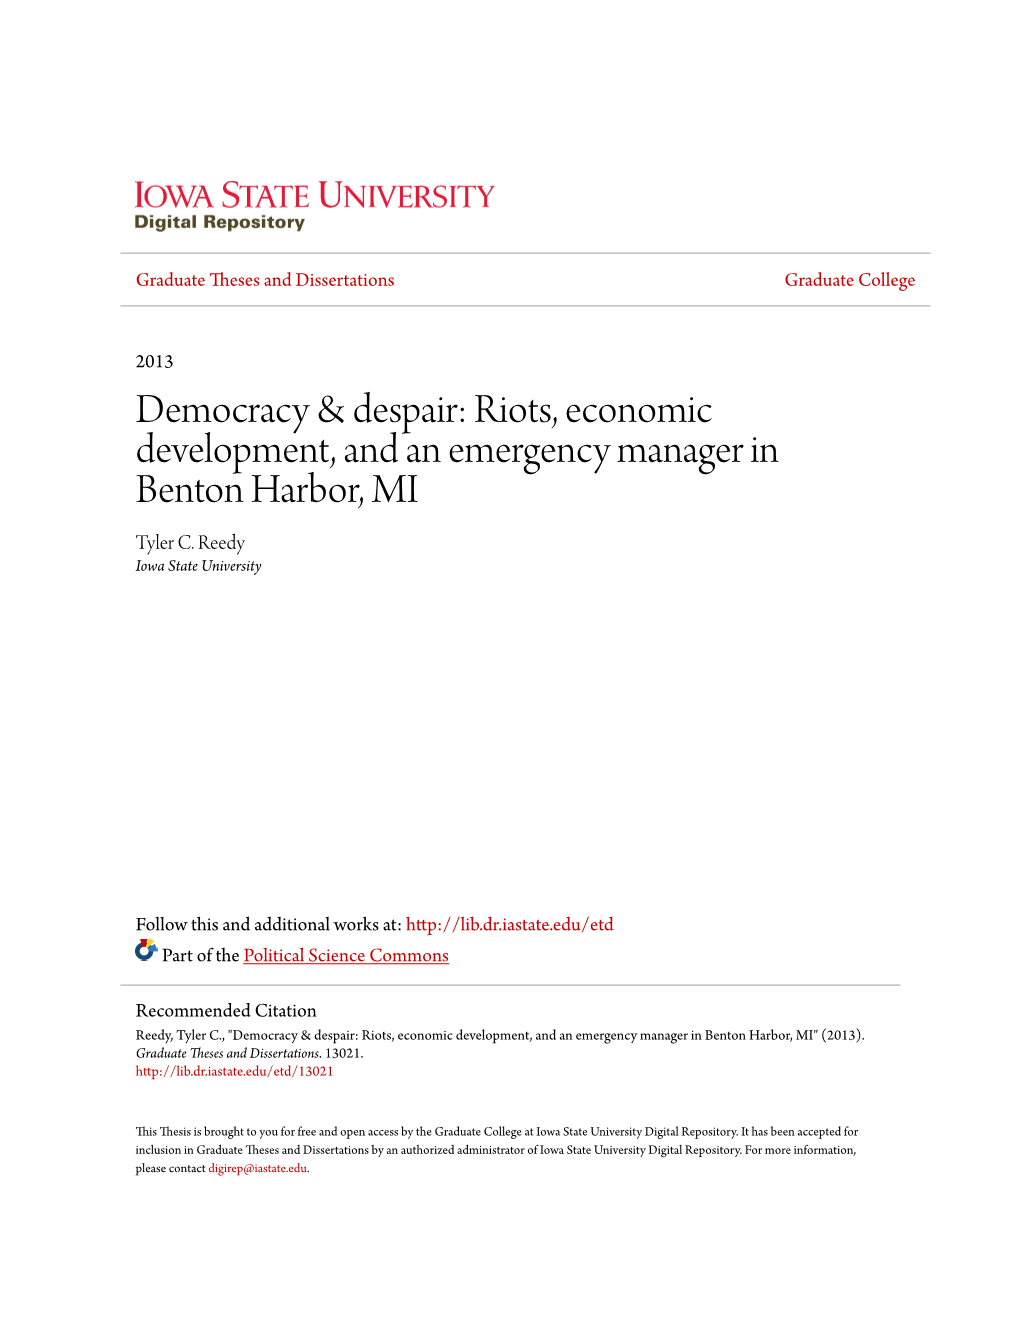 Democracy & Despair: Riots, Economic Development, and An